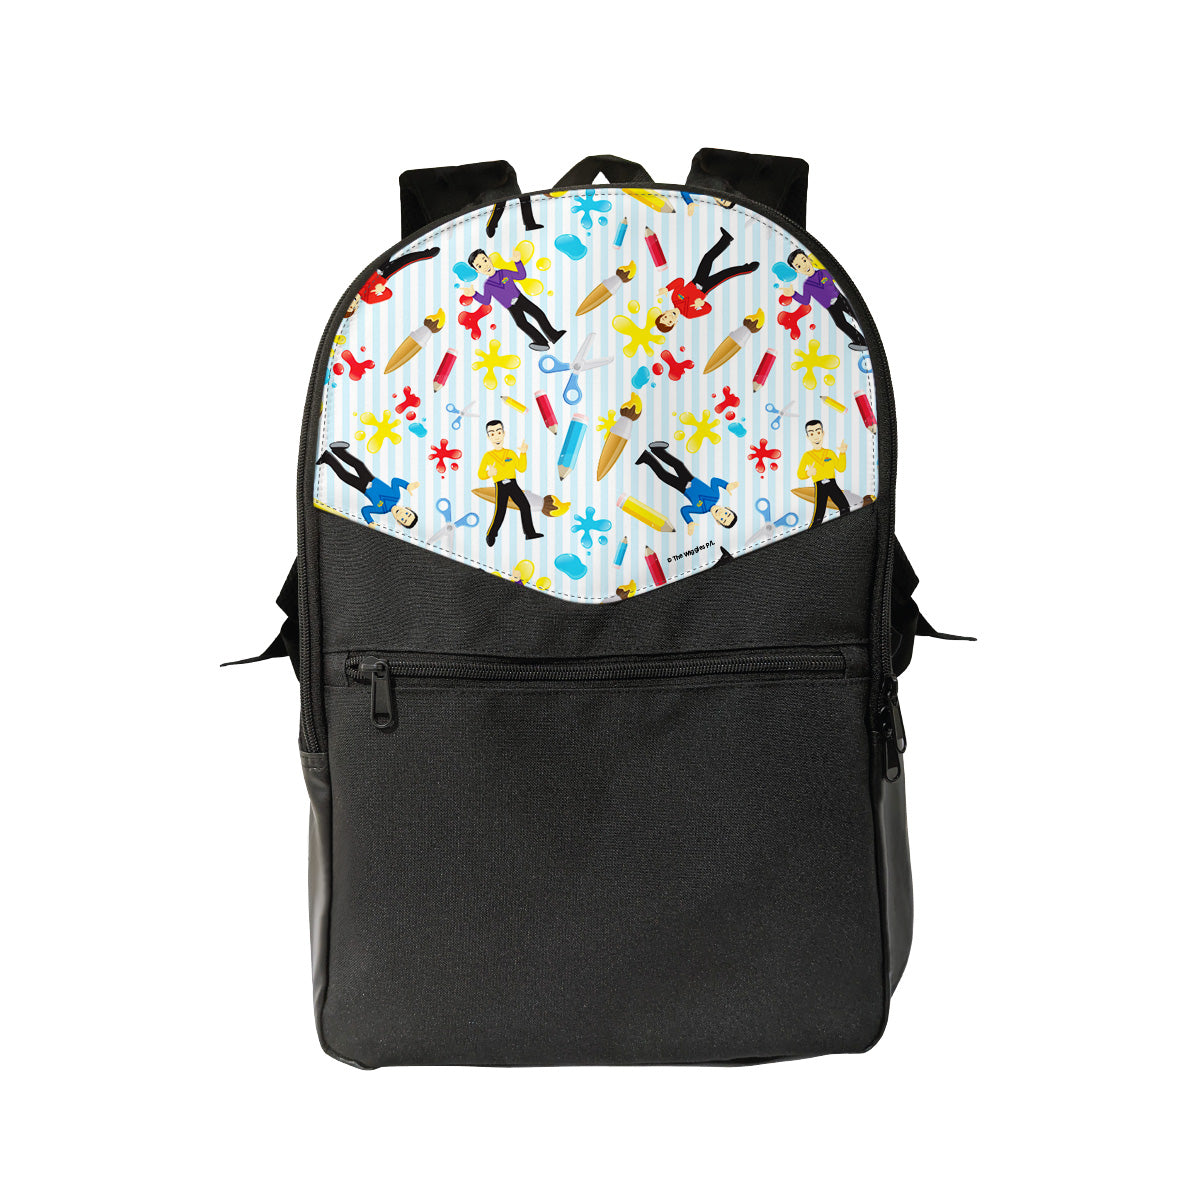 The Wiggles Original School Backpack